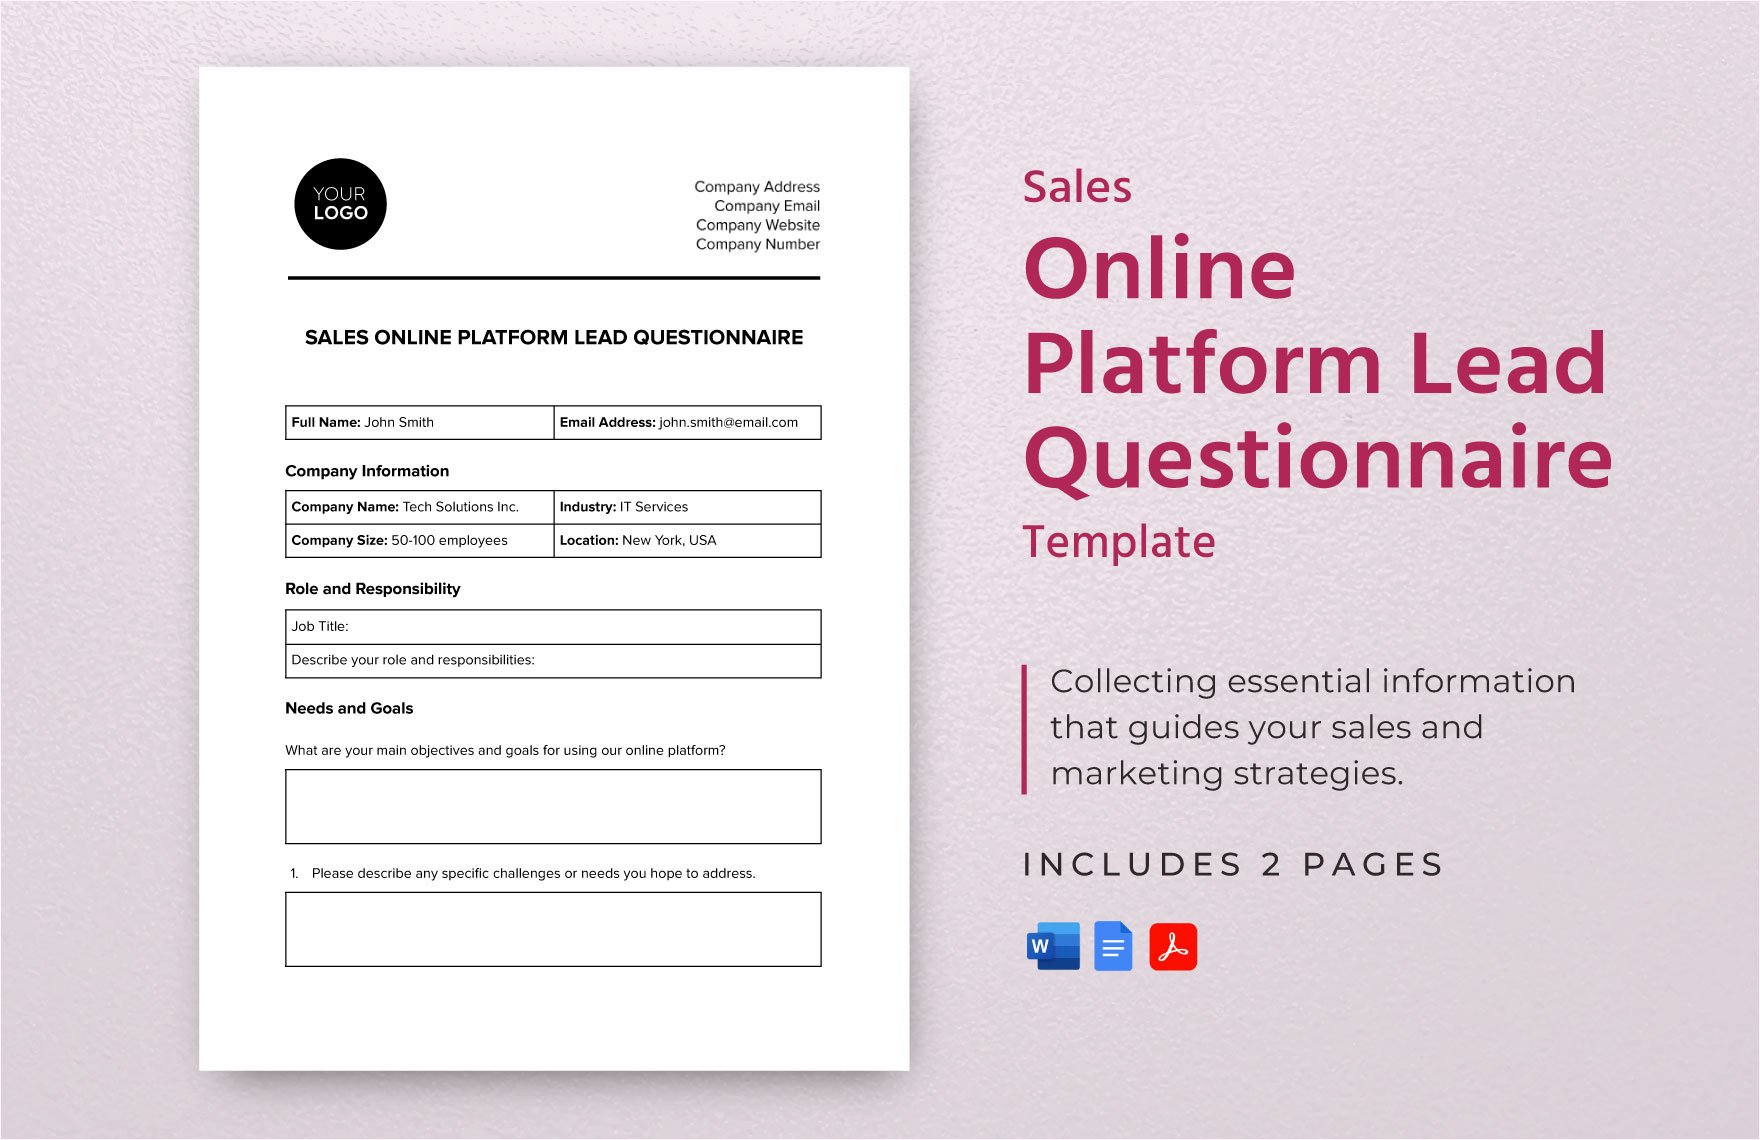 Sales Online Platform Lead Questionnaire Template in Word, Google Docs, PDF